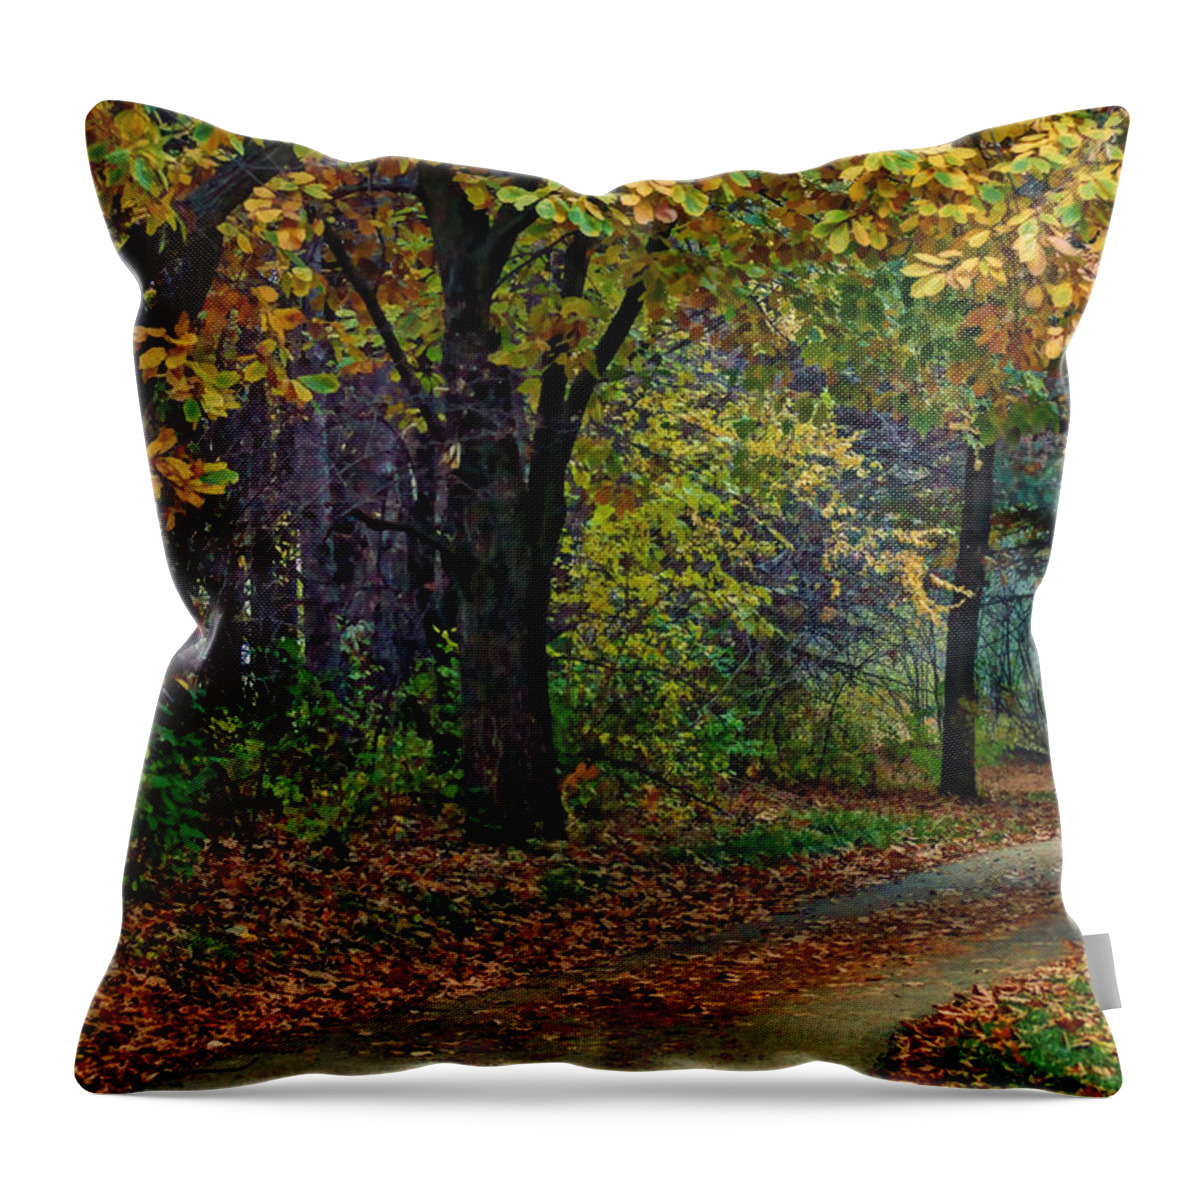 Autumn Throw Pillow featuring the photograph Autumn Path by Nikolyn McDonald